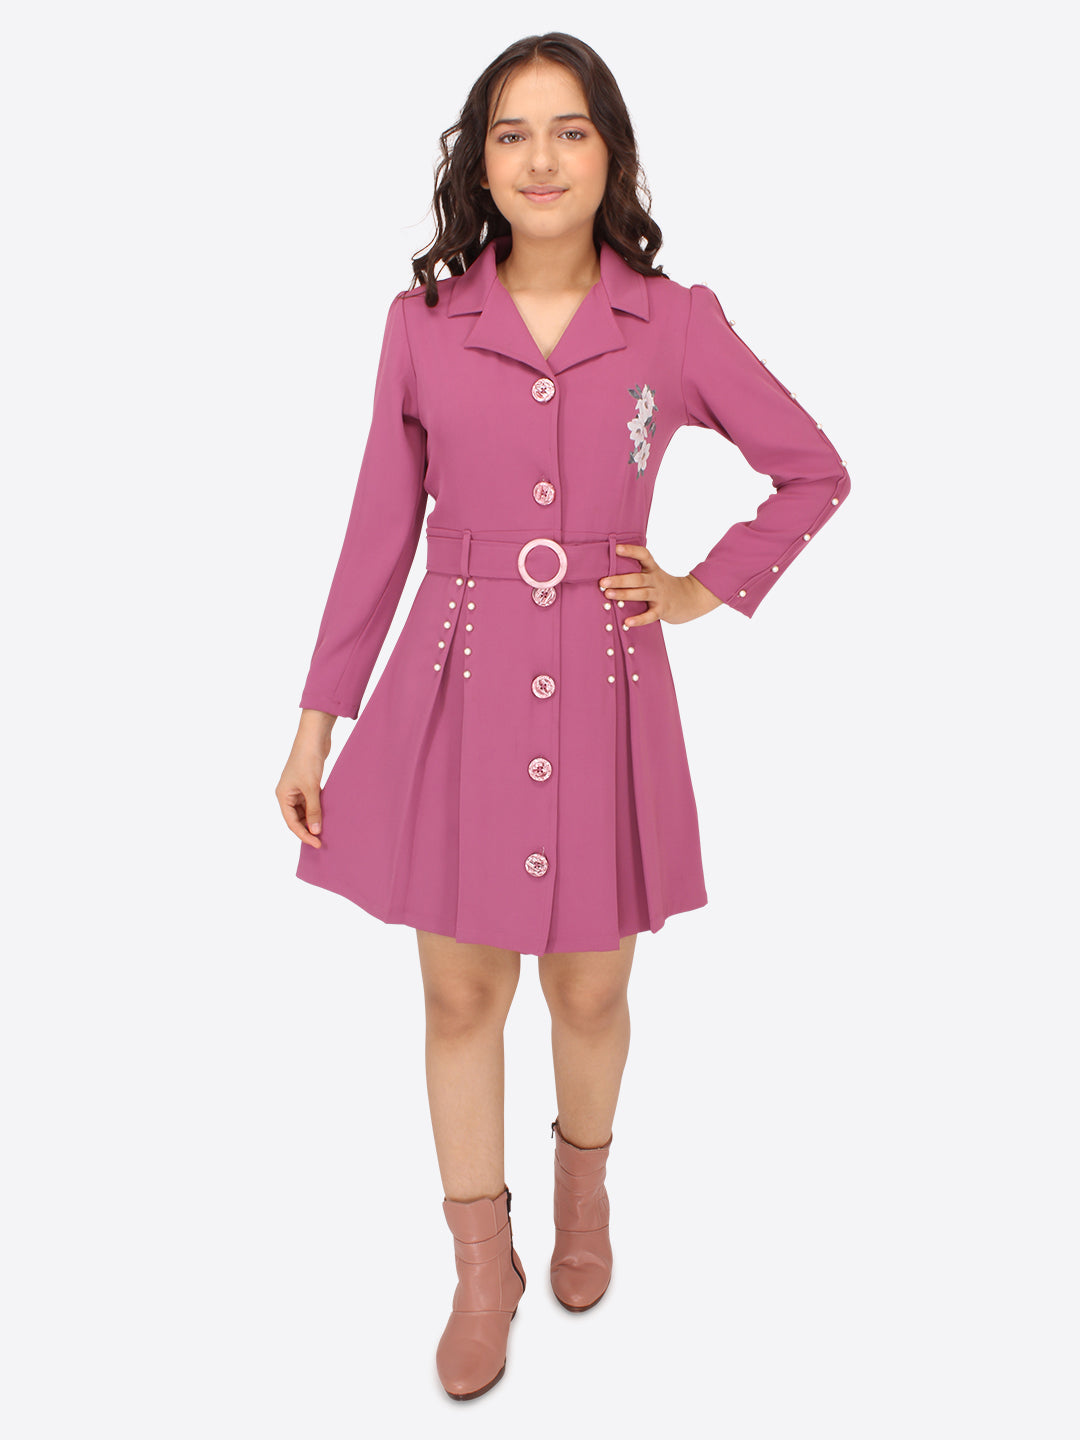 Girls Above Knee Party Dress  (Purple, Full Sleeve)